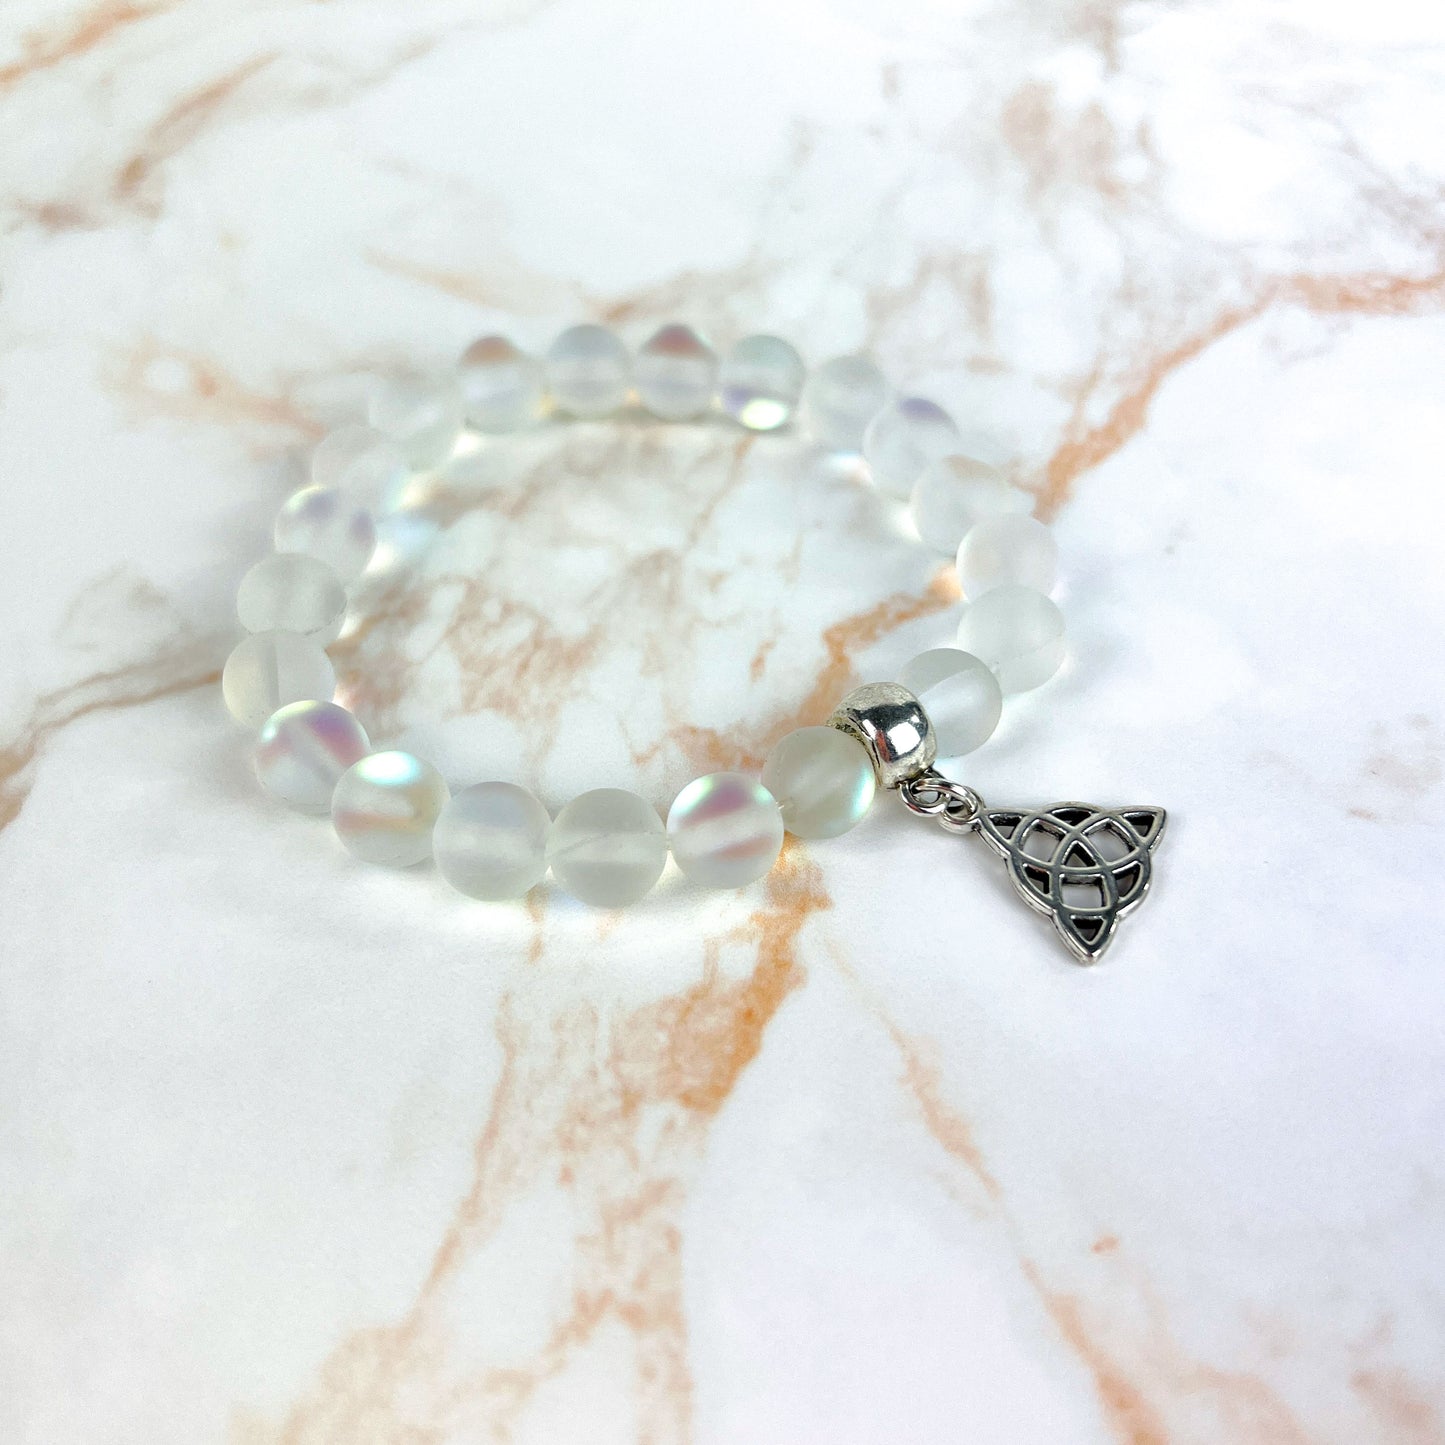 Mermaid glass mala beaded bracelet with a triquetra charm boho mystic aura beads bracelet crystal iridescent glowy bracelet